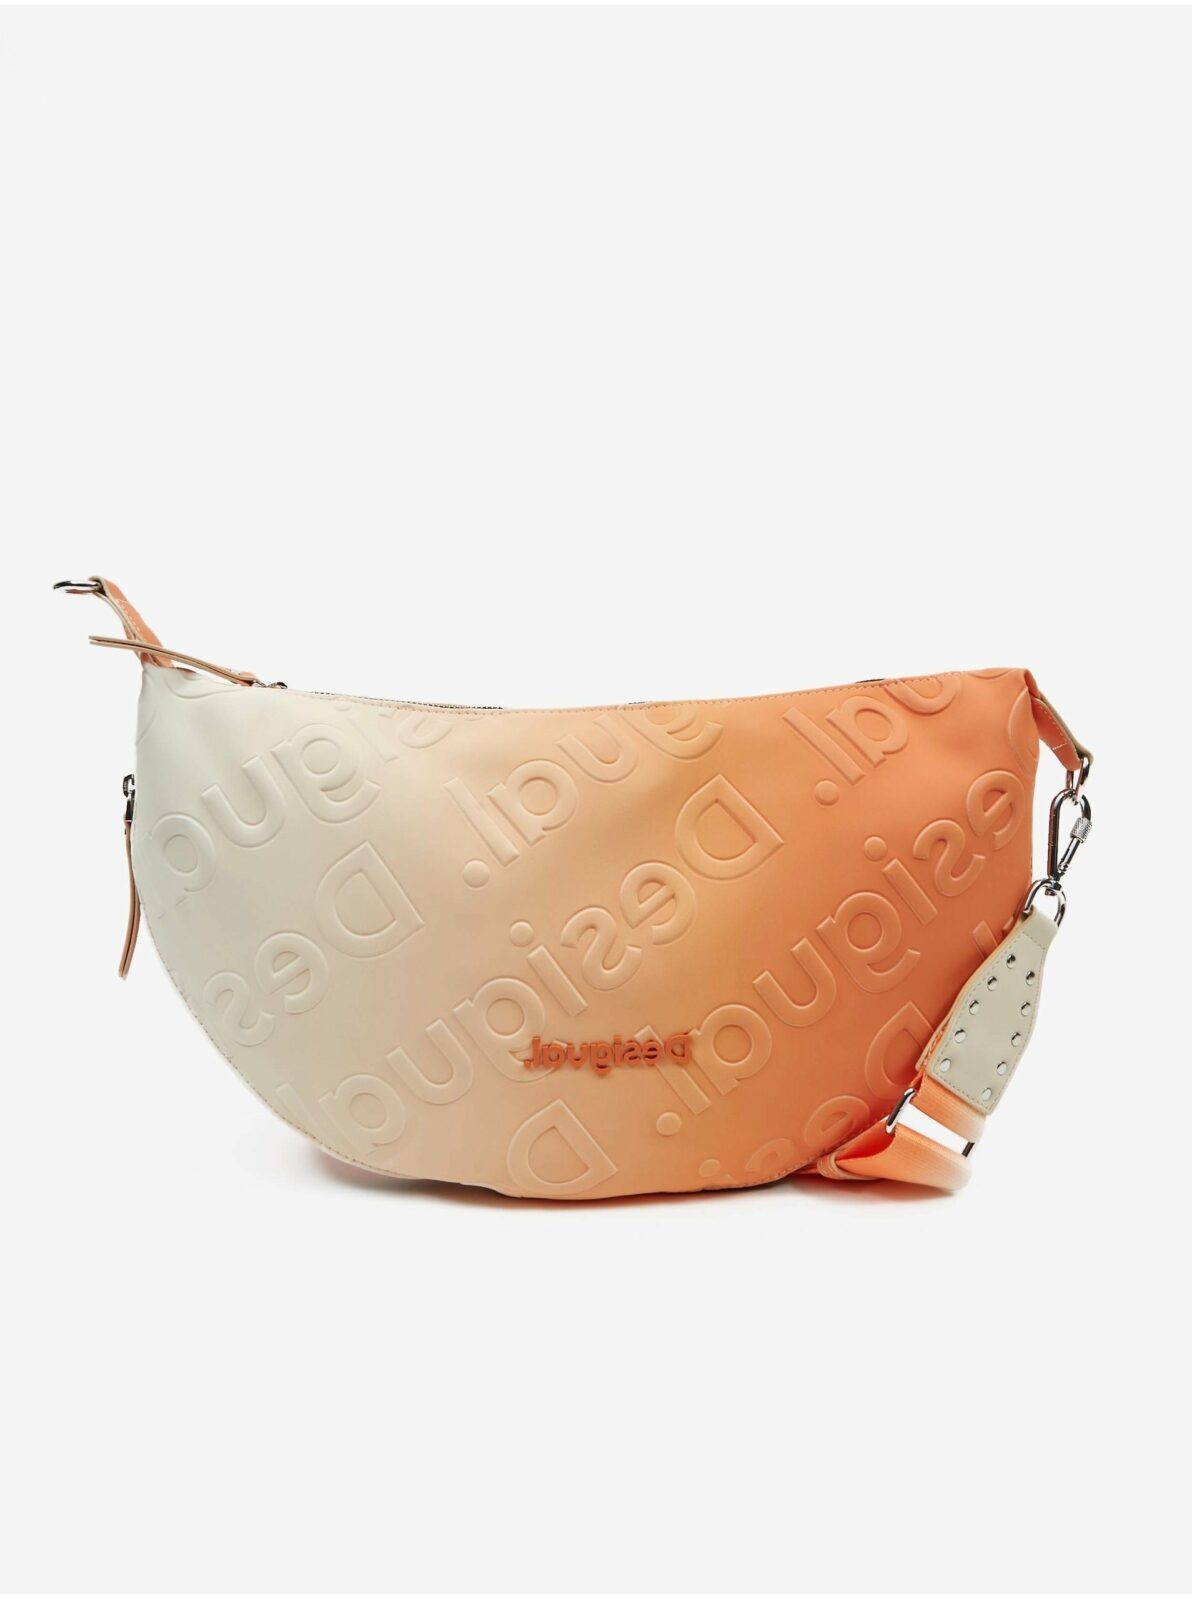 Oranžovo-krémová dámská kabelka Desigual Colorama Deep